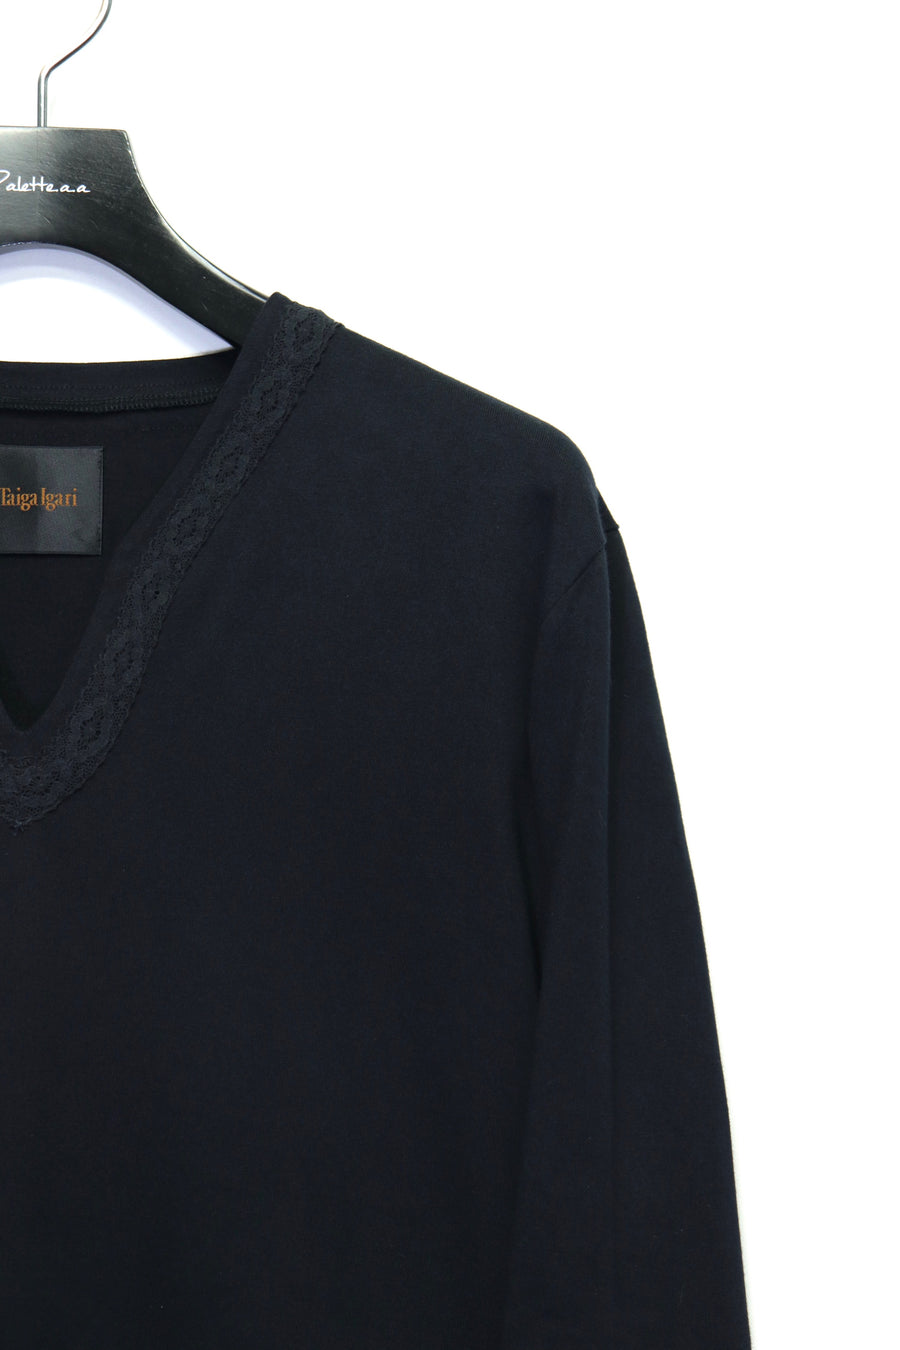 Taiga Igari  Lace L/S T-shirt(BLACK)